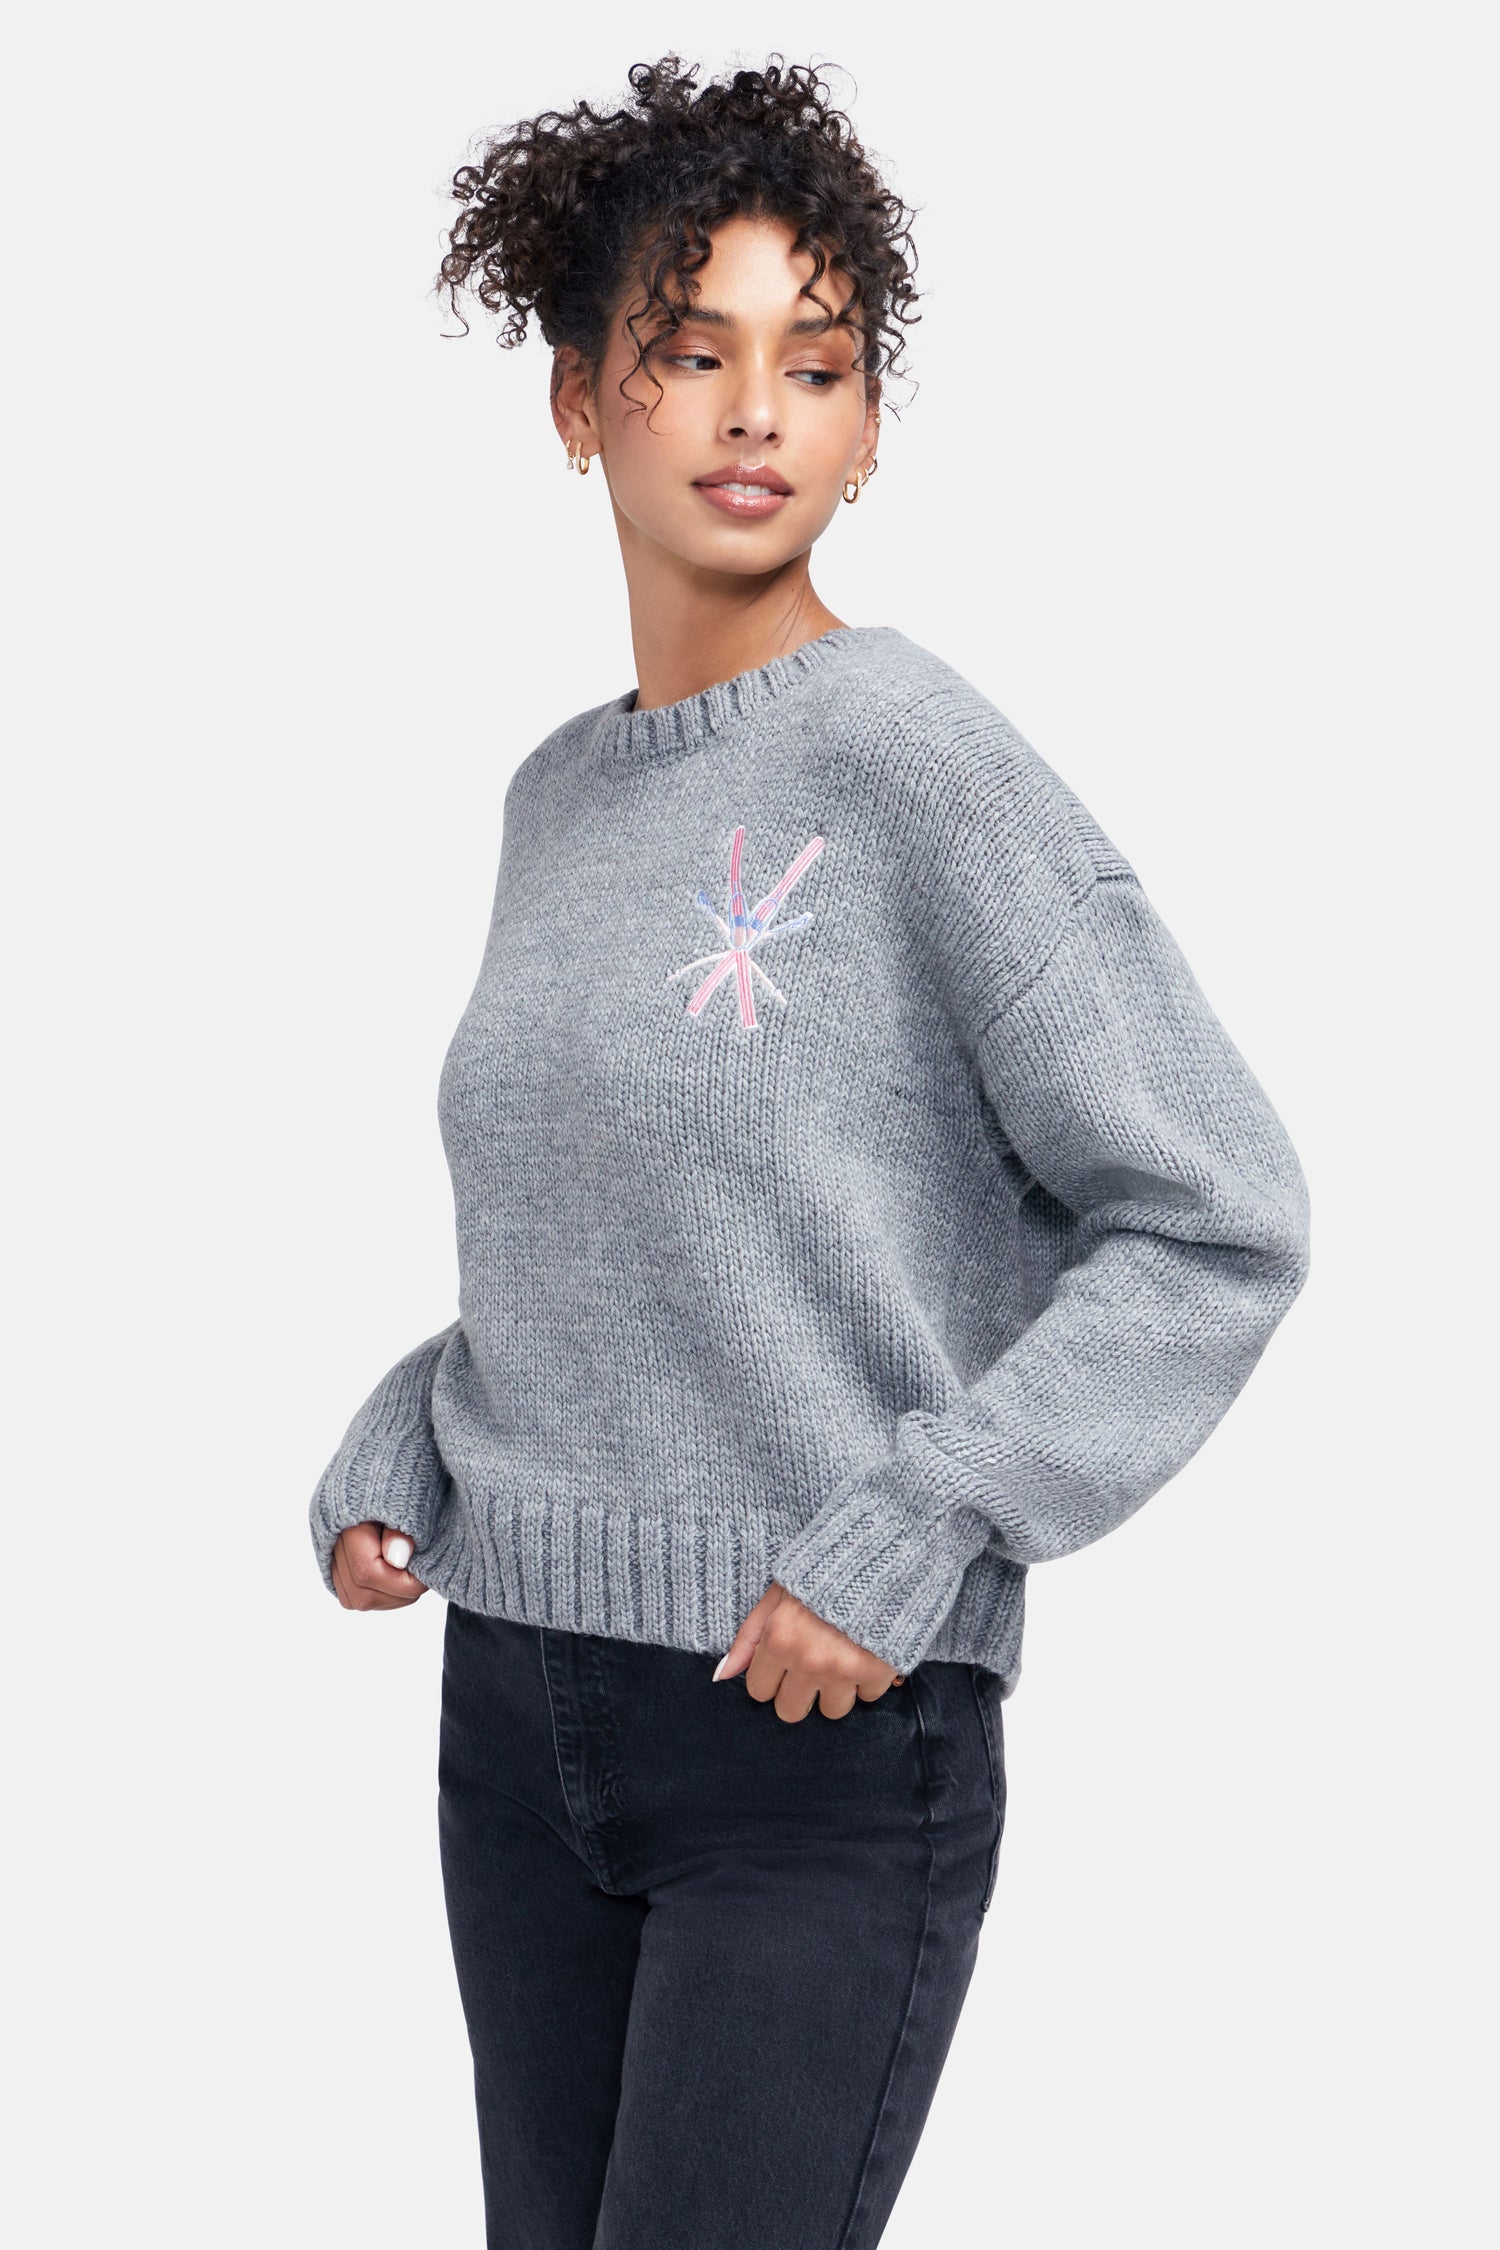 Go With Snow Sweater | Heather